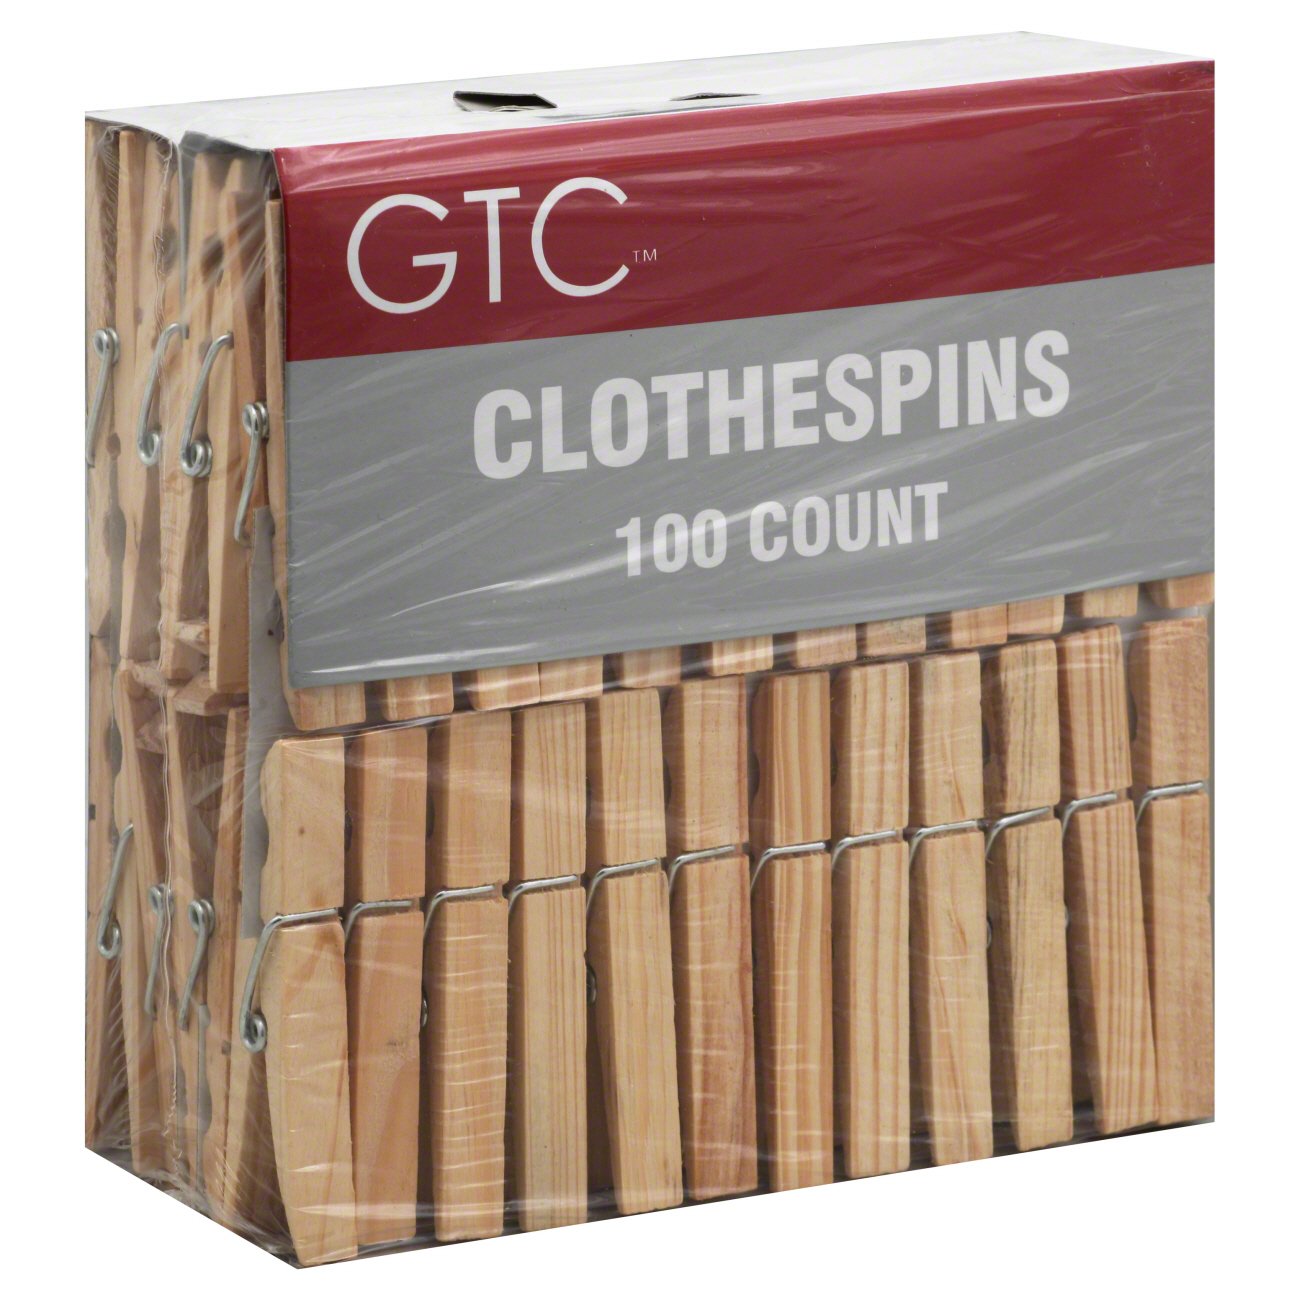 Evriholder Wooden Clothespins - Shop Chip Clips at H-E-B